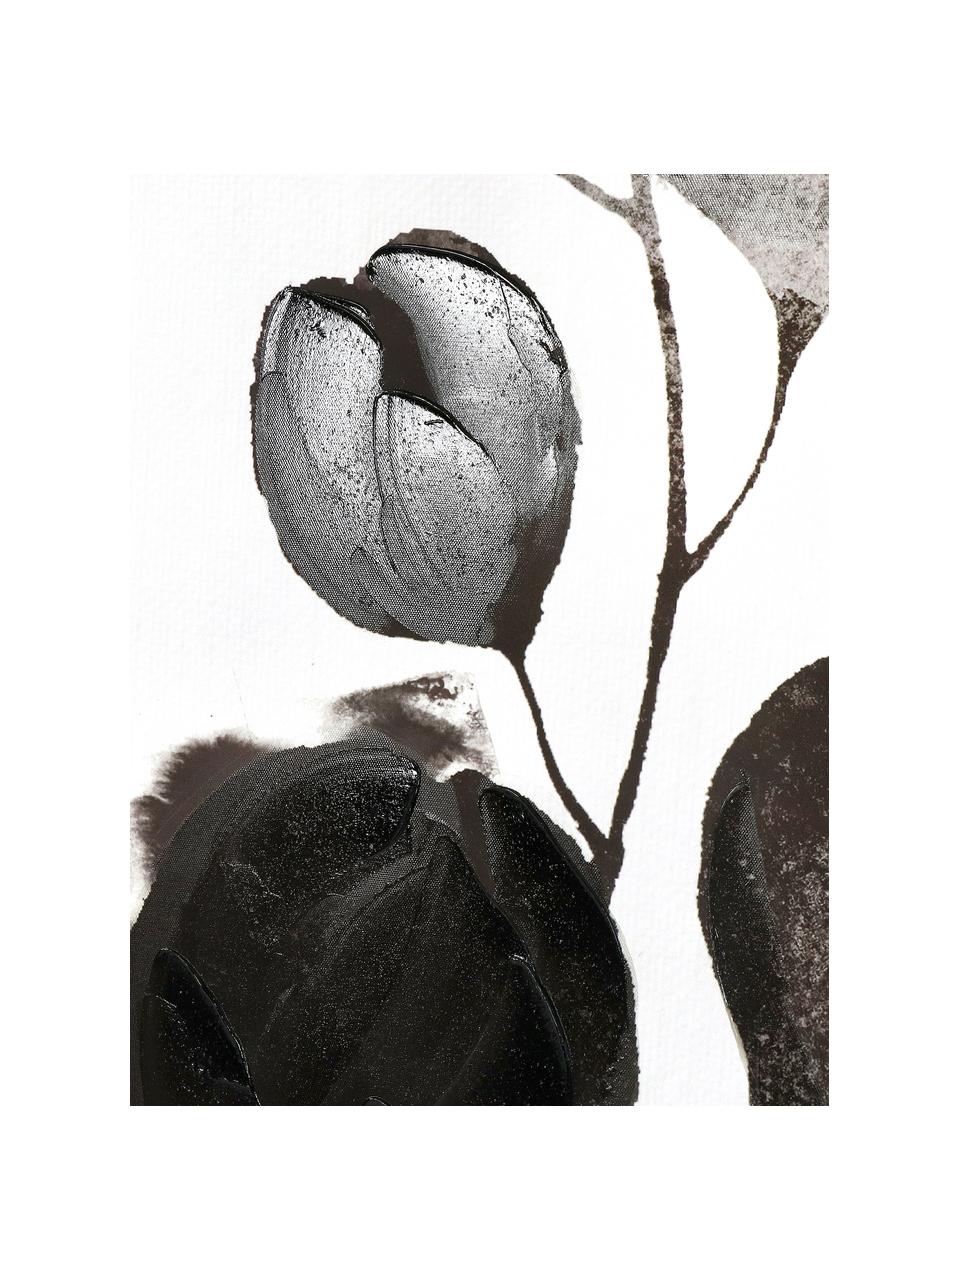 Stampa su tela dipinta Pelo, Immagine: pittura ad olio, Bianco, nero, Larg. 100 x Alt. 140 cm